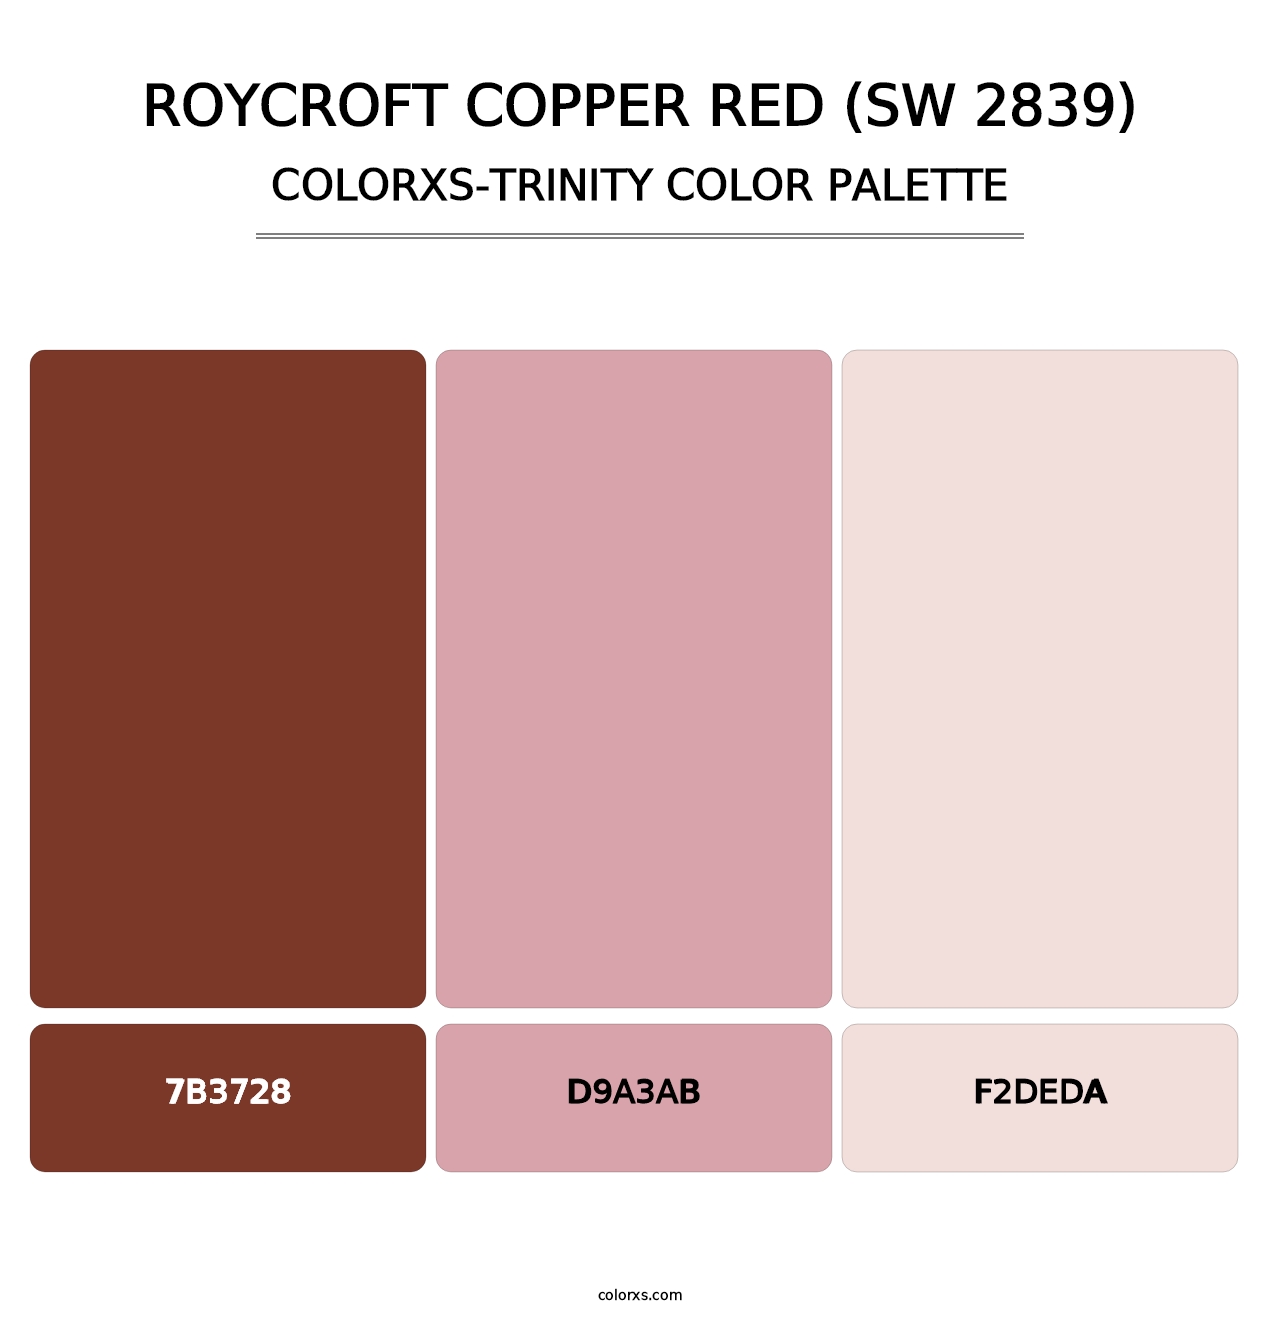 Roycroft Copper Red (SW 2839) - Colorxs Trinity Palette